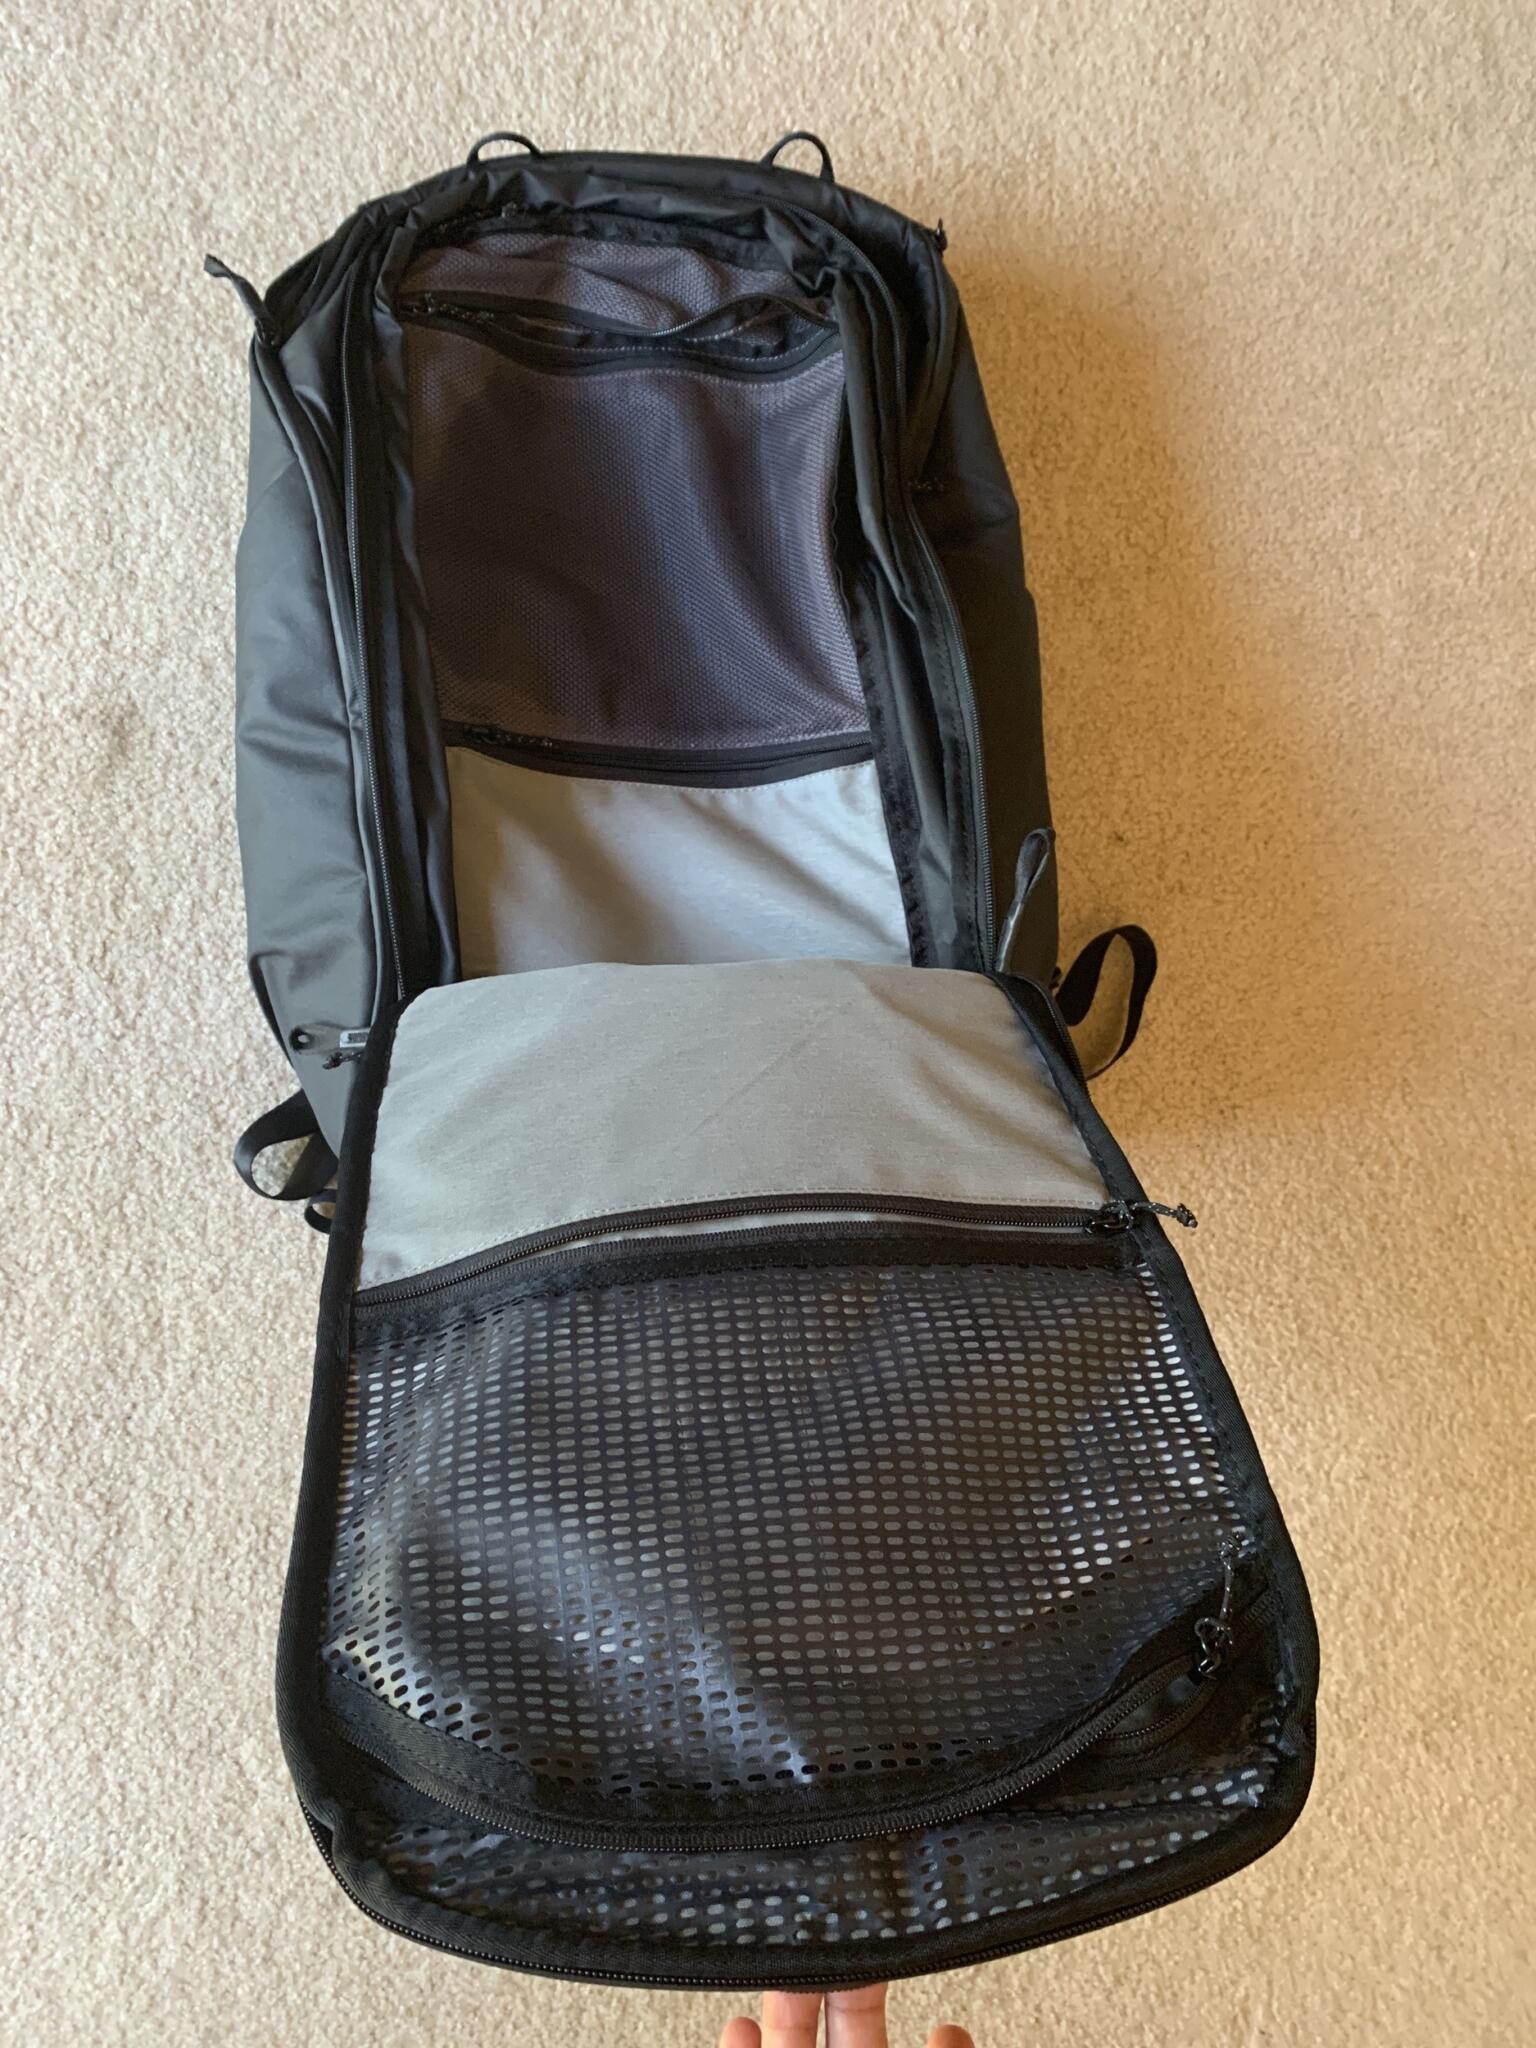 Peak Design 45 L travel backpack review